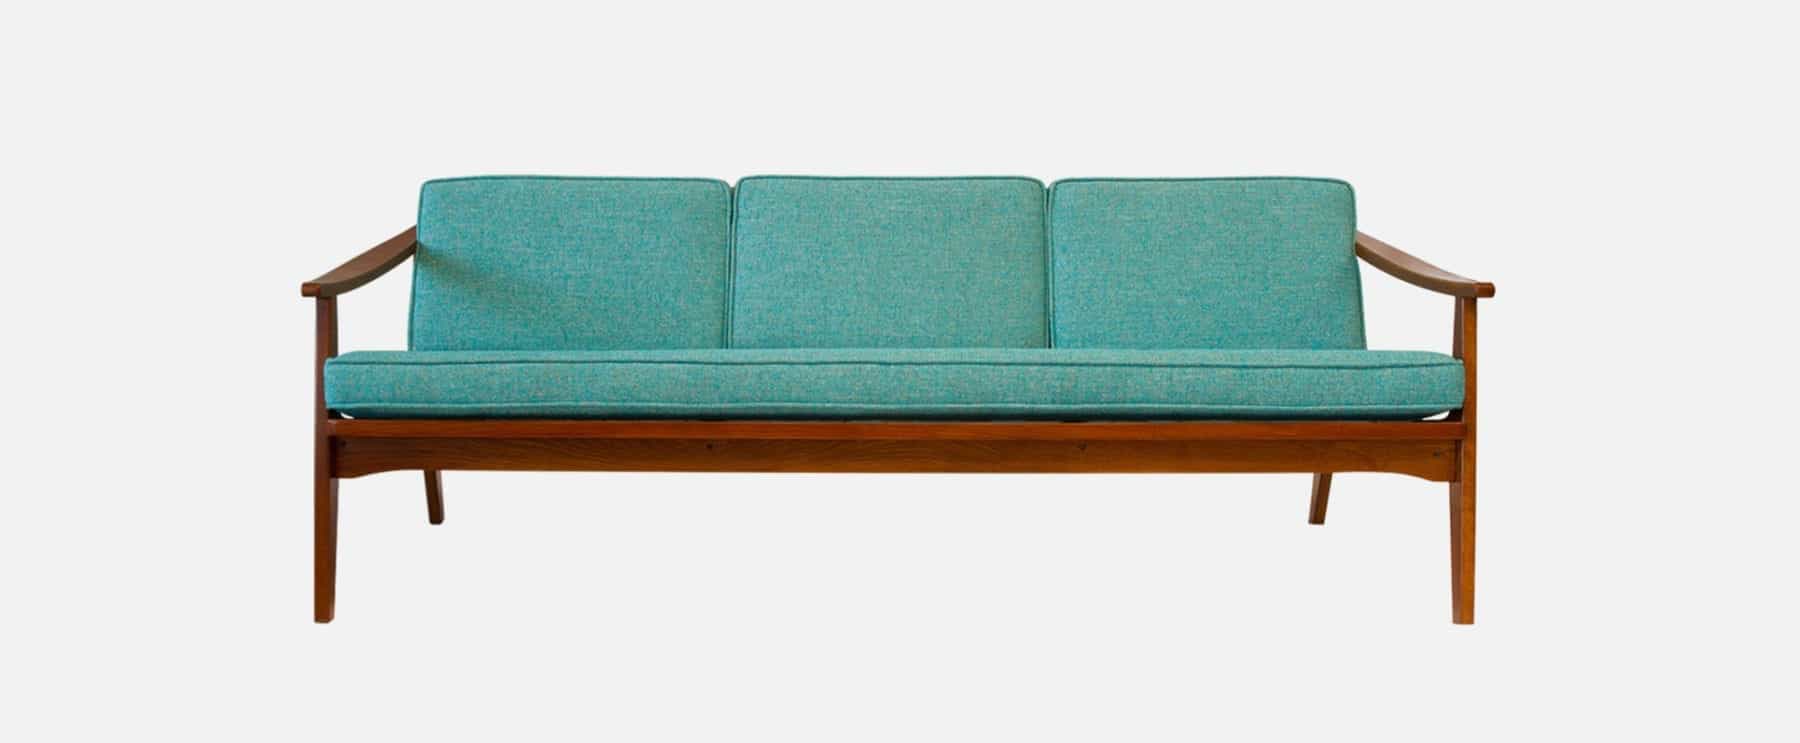 Scandinavian sofa, affordable mid century modern furniture